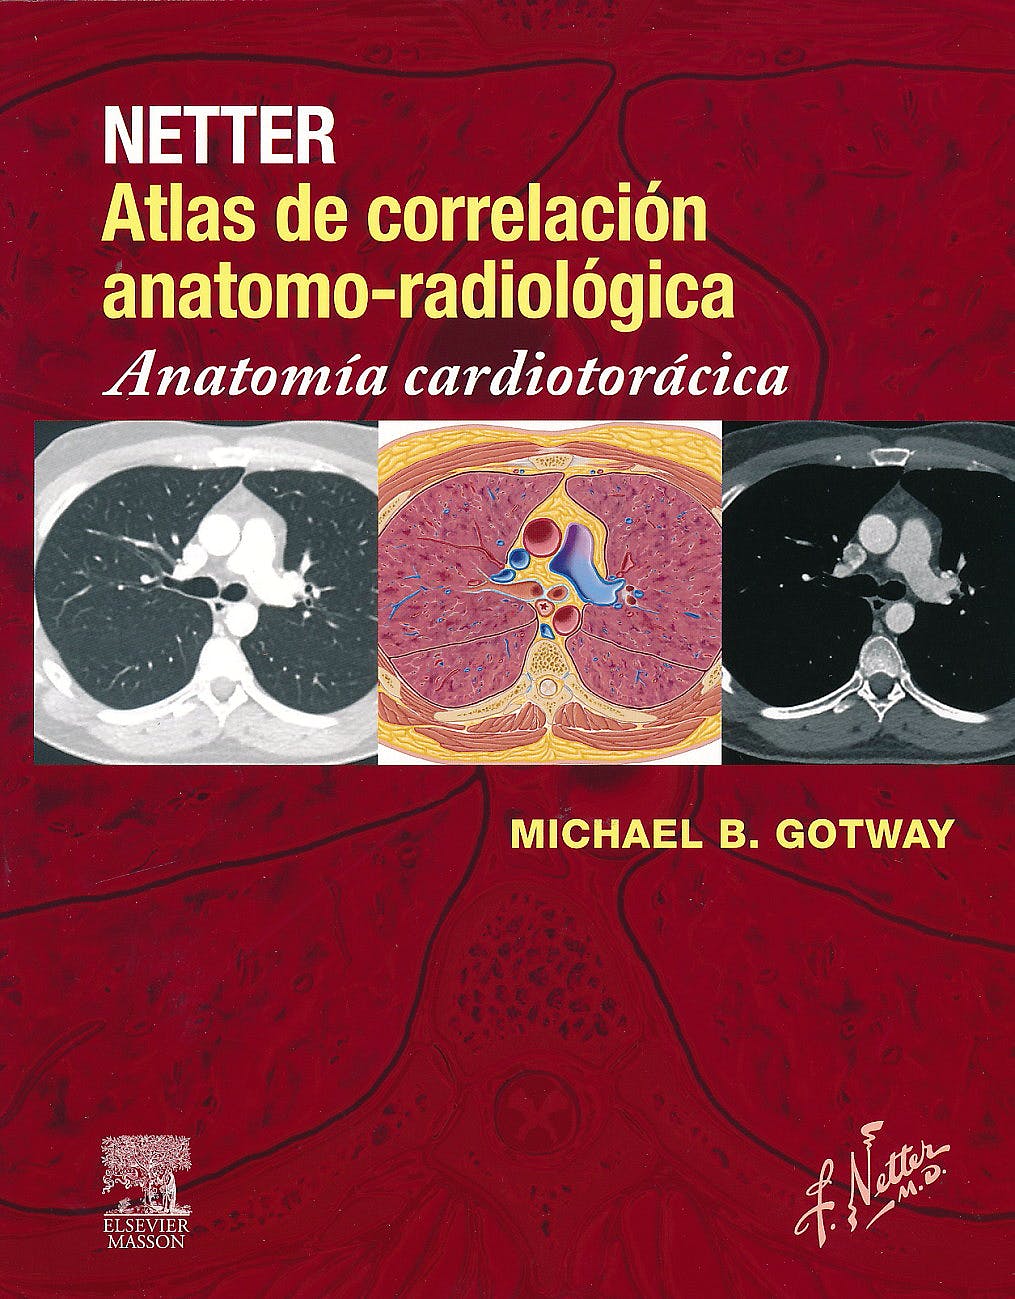 Netter Atlas de correlación anatomo-radiológica: Anatomía cardiotorácica